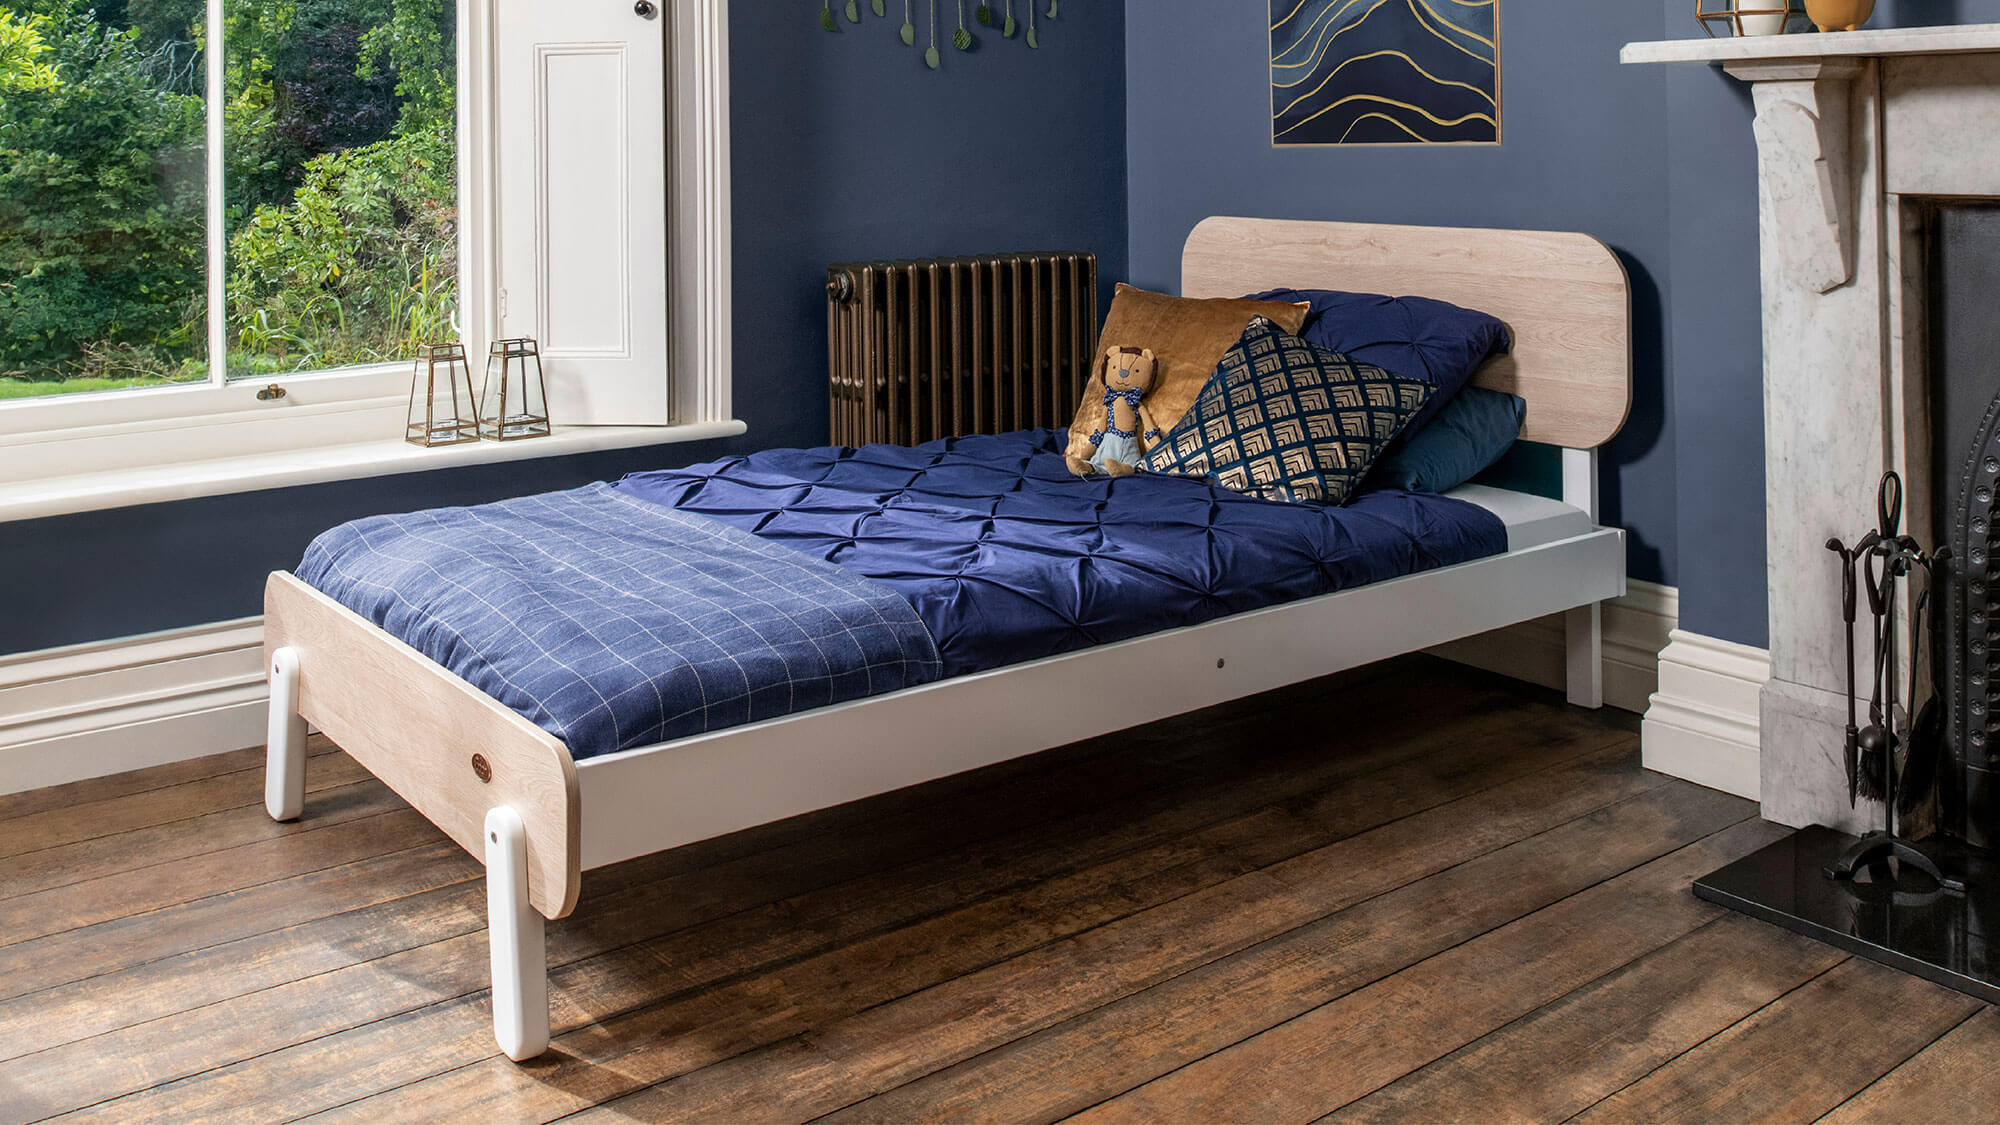 Natty King Single Bed with navy decor